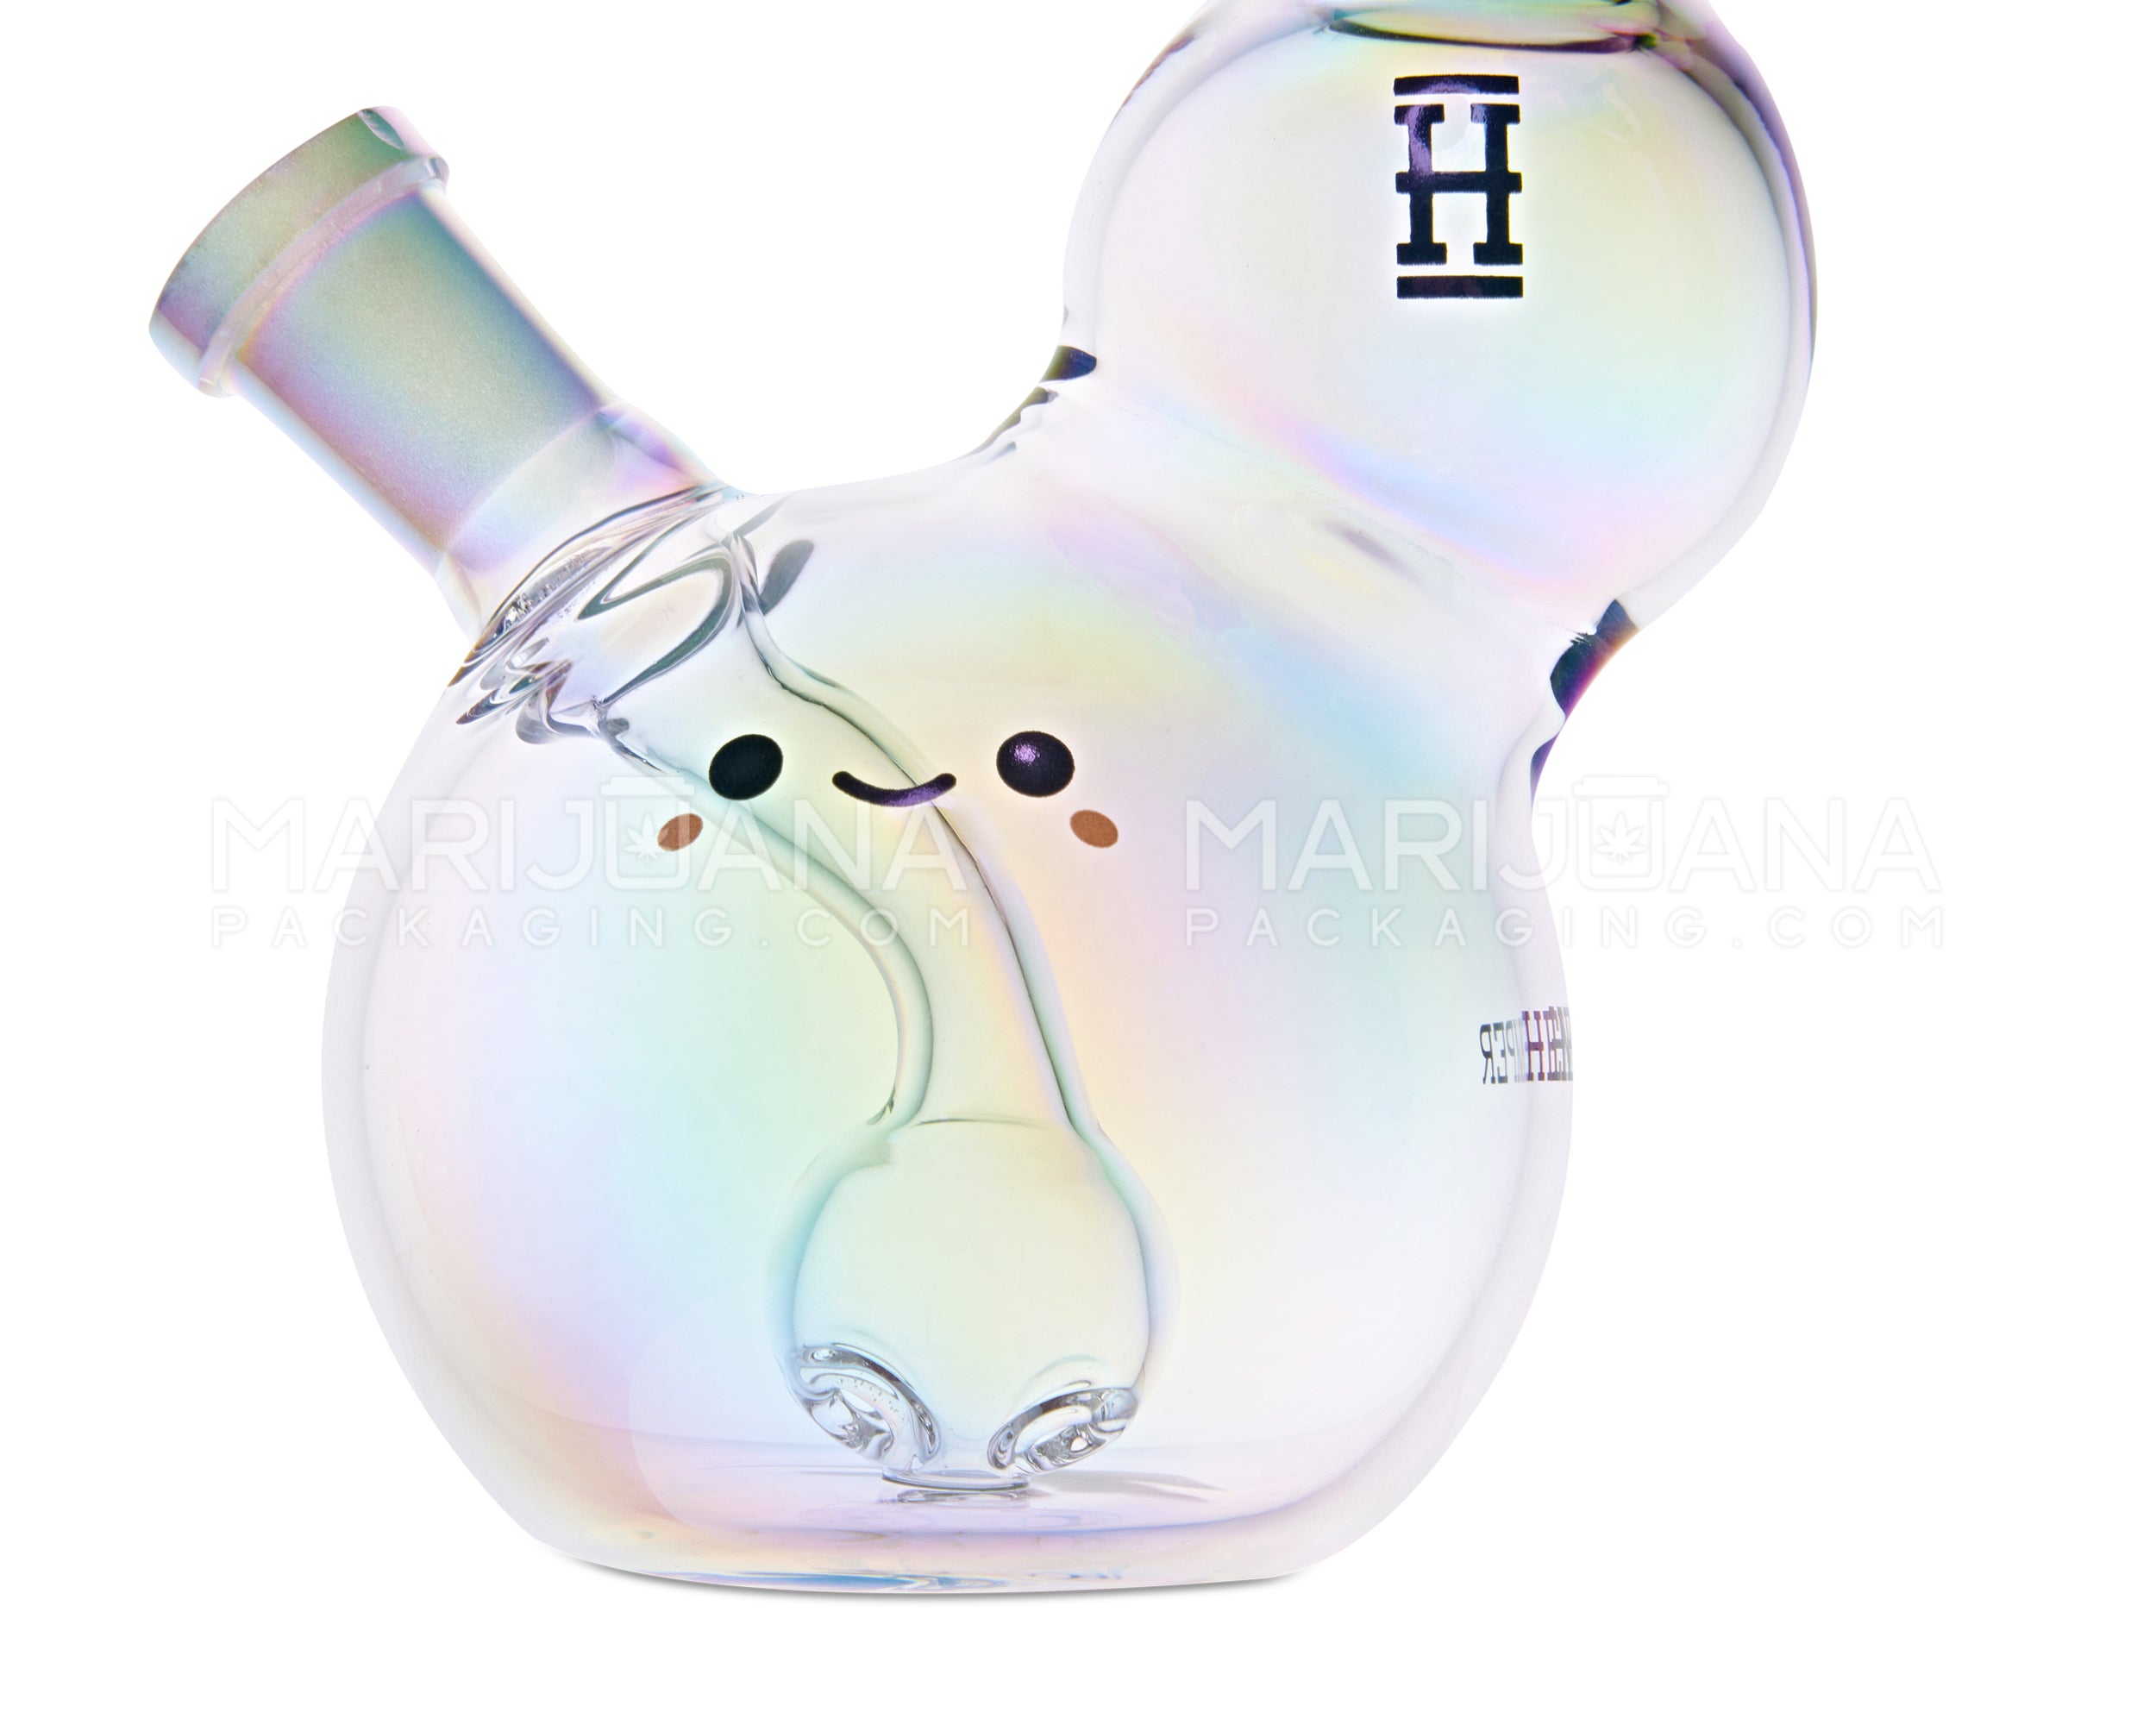 HEMPER | Bubble Mini Glass Water Pipe | 4.5in Tall - 14mm Bowl - Clear